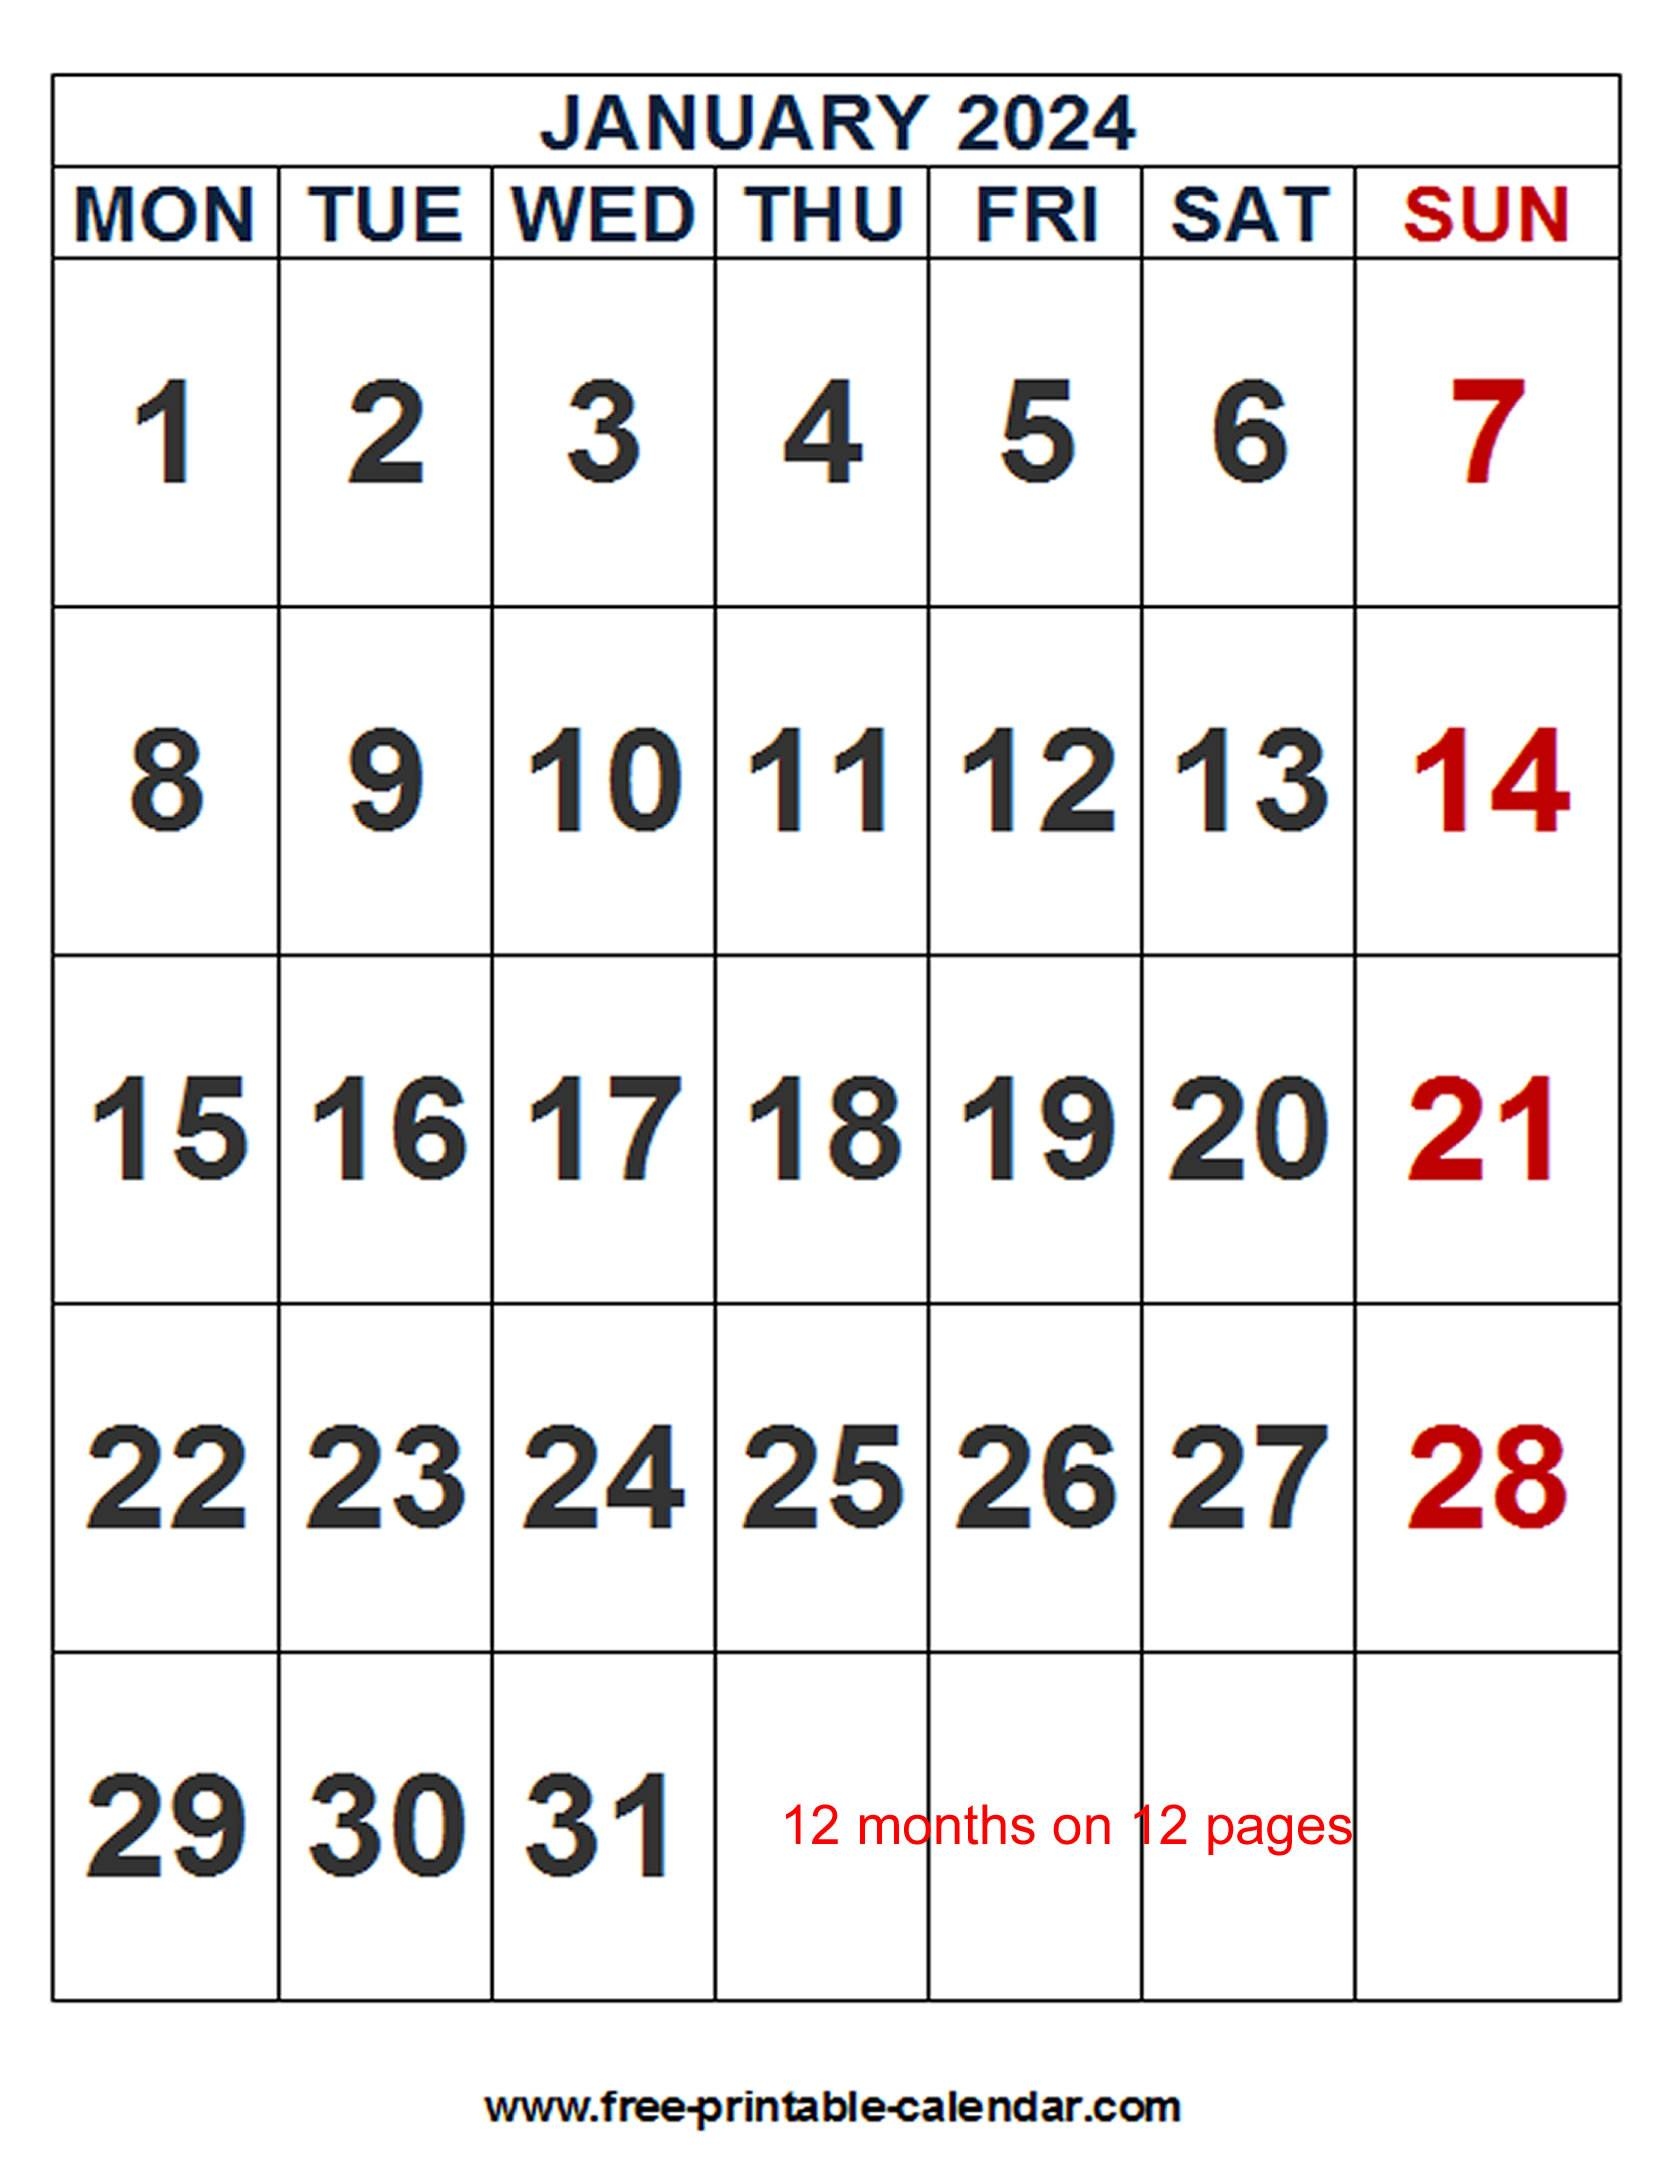 2024 Calendar Word Template - Free-Printable-Calendar in Free Printable Calendar 2024 Word Doc